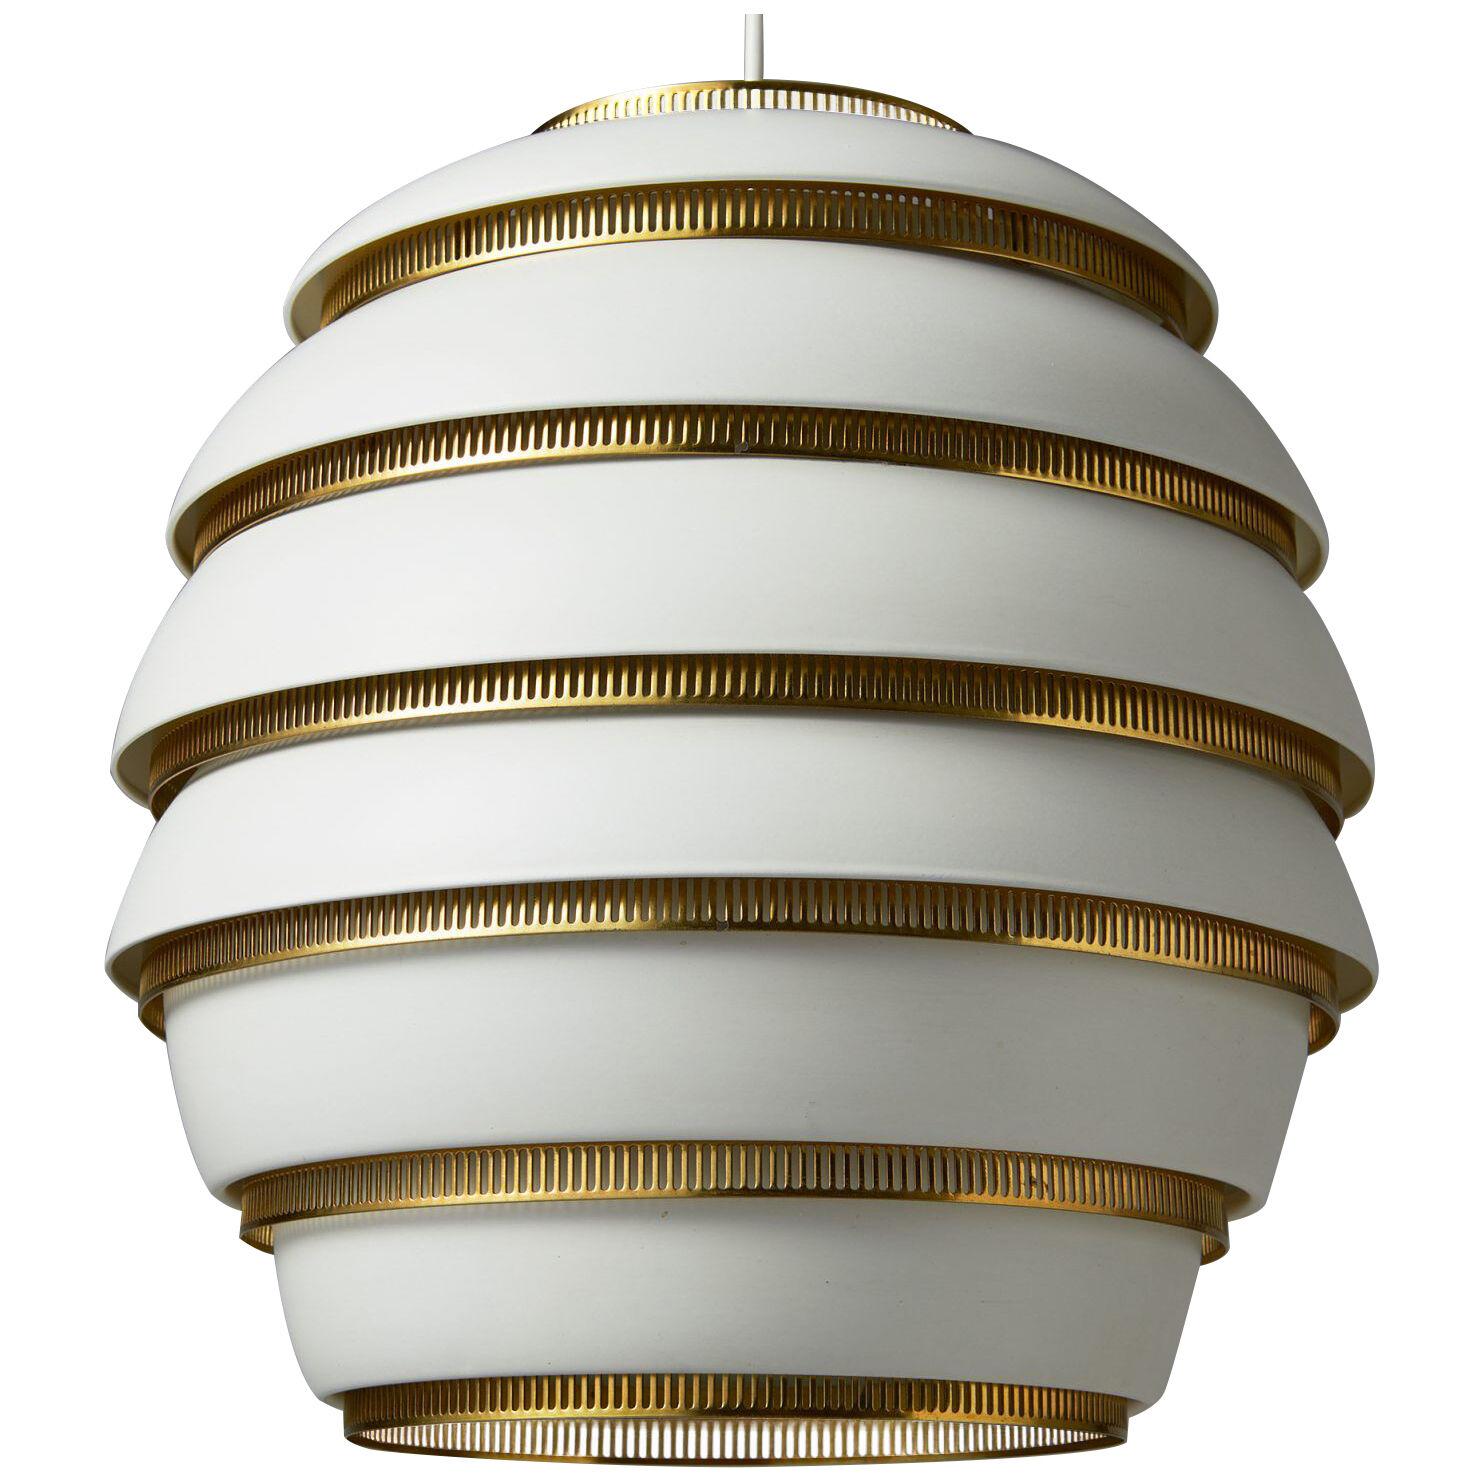 Ceiling lamp ‘Beehive’ model A332 designed by Alvar Aalto for Valaistustyo,